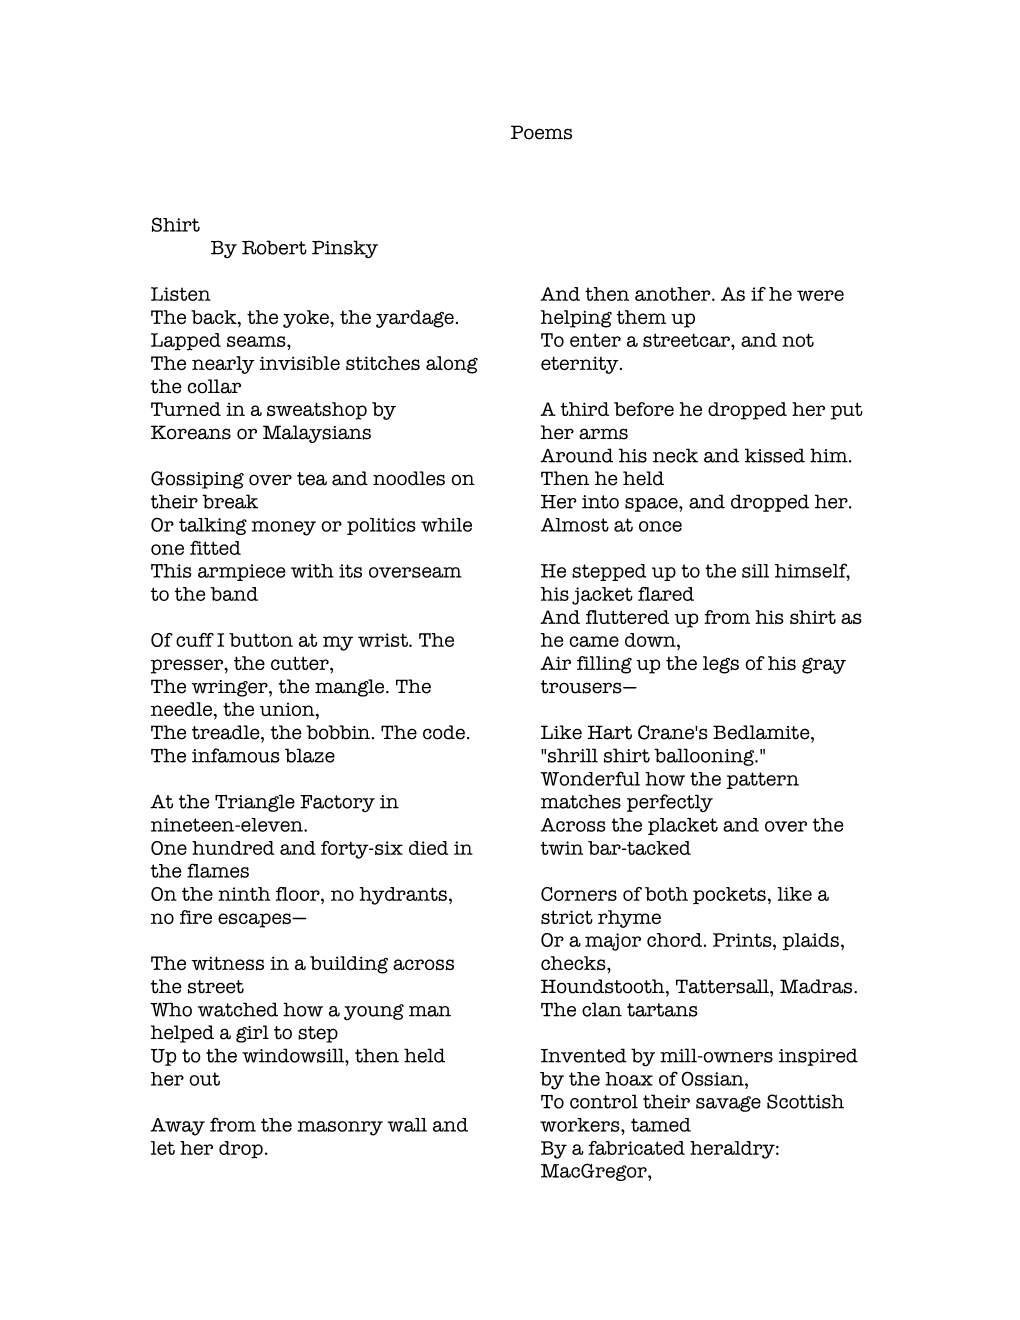 Poems Shirt by Robert Pinsky Listen the Back, the Yoke, the Yardage